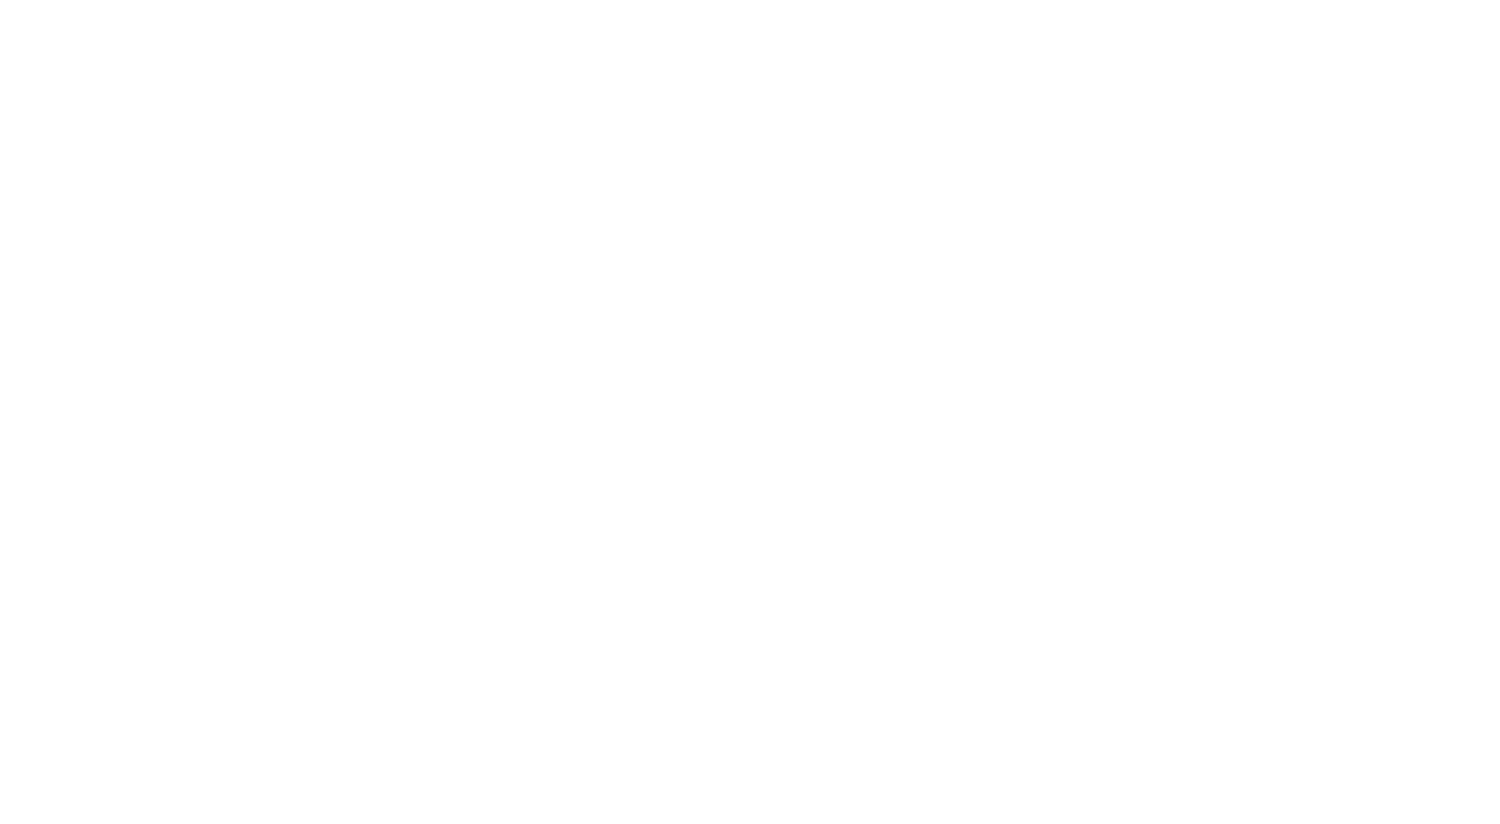 Rocker B Ranch